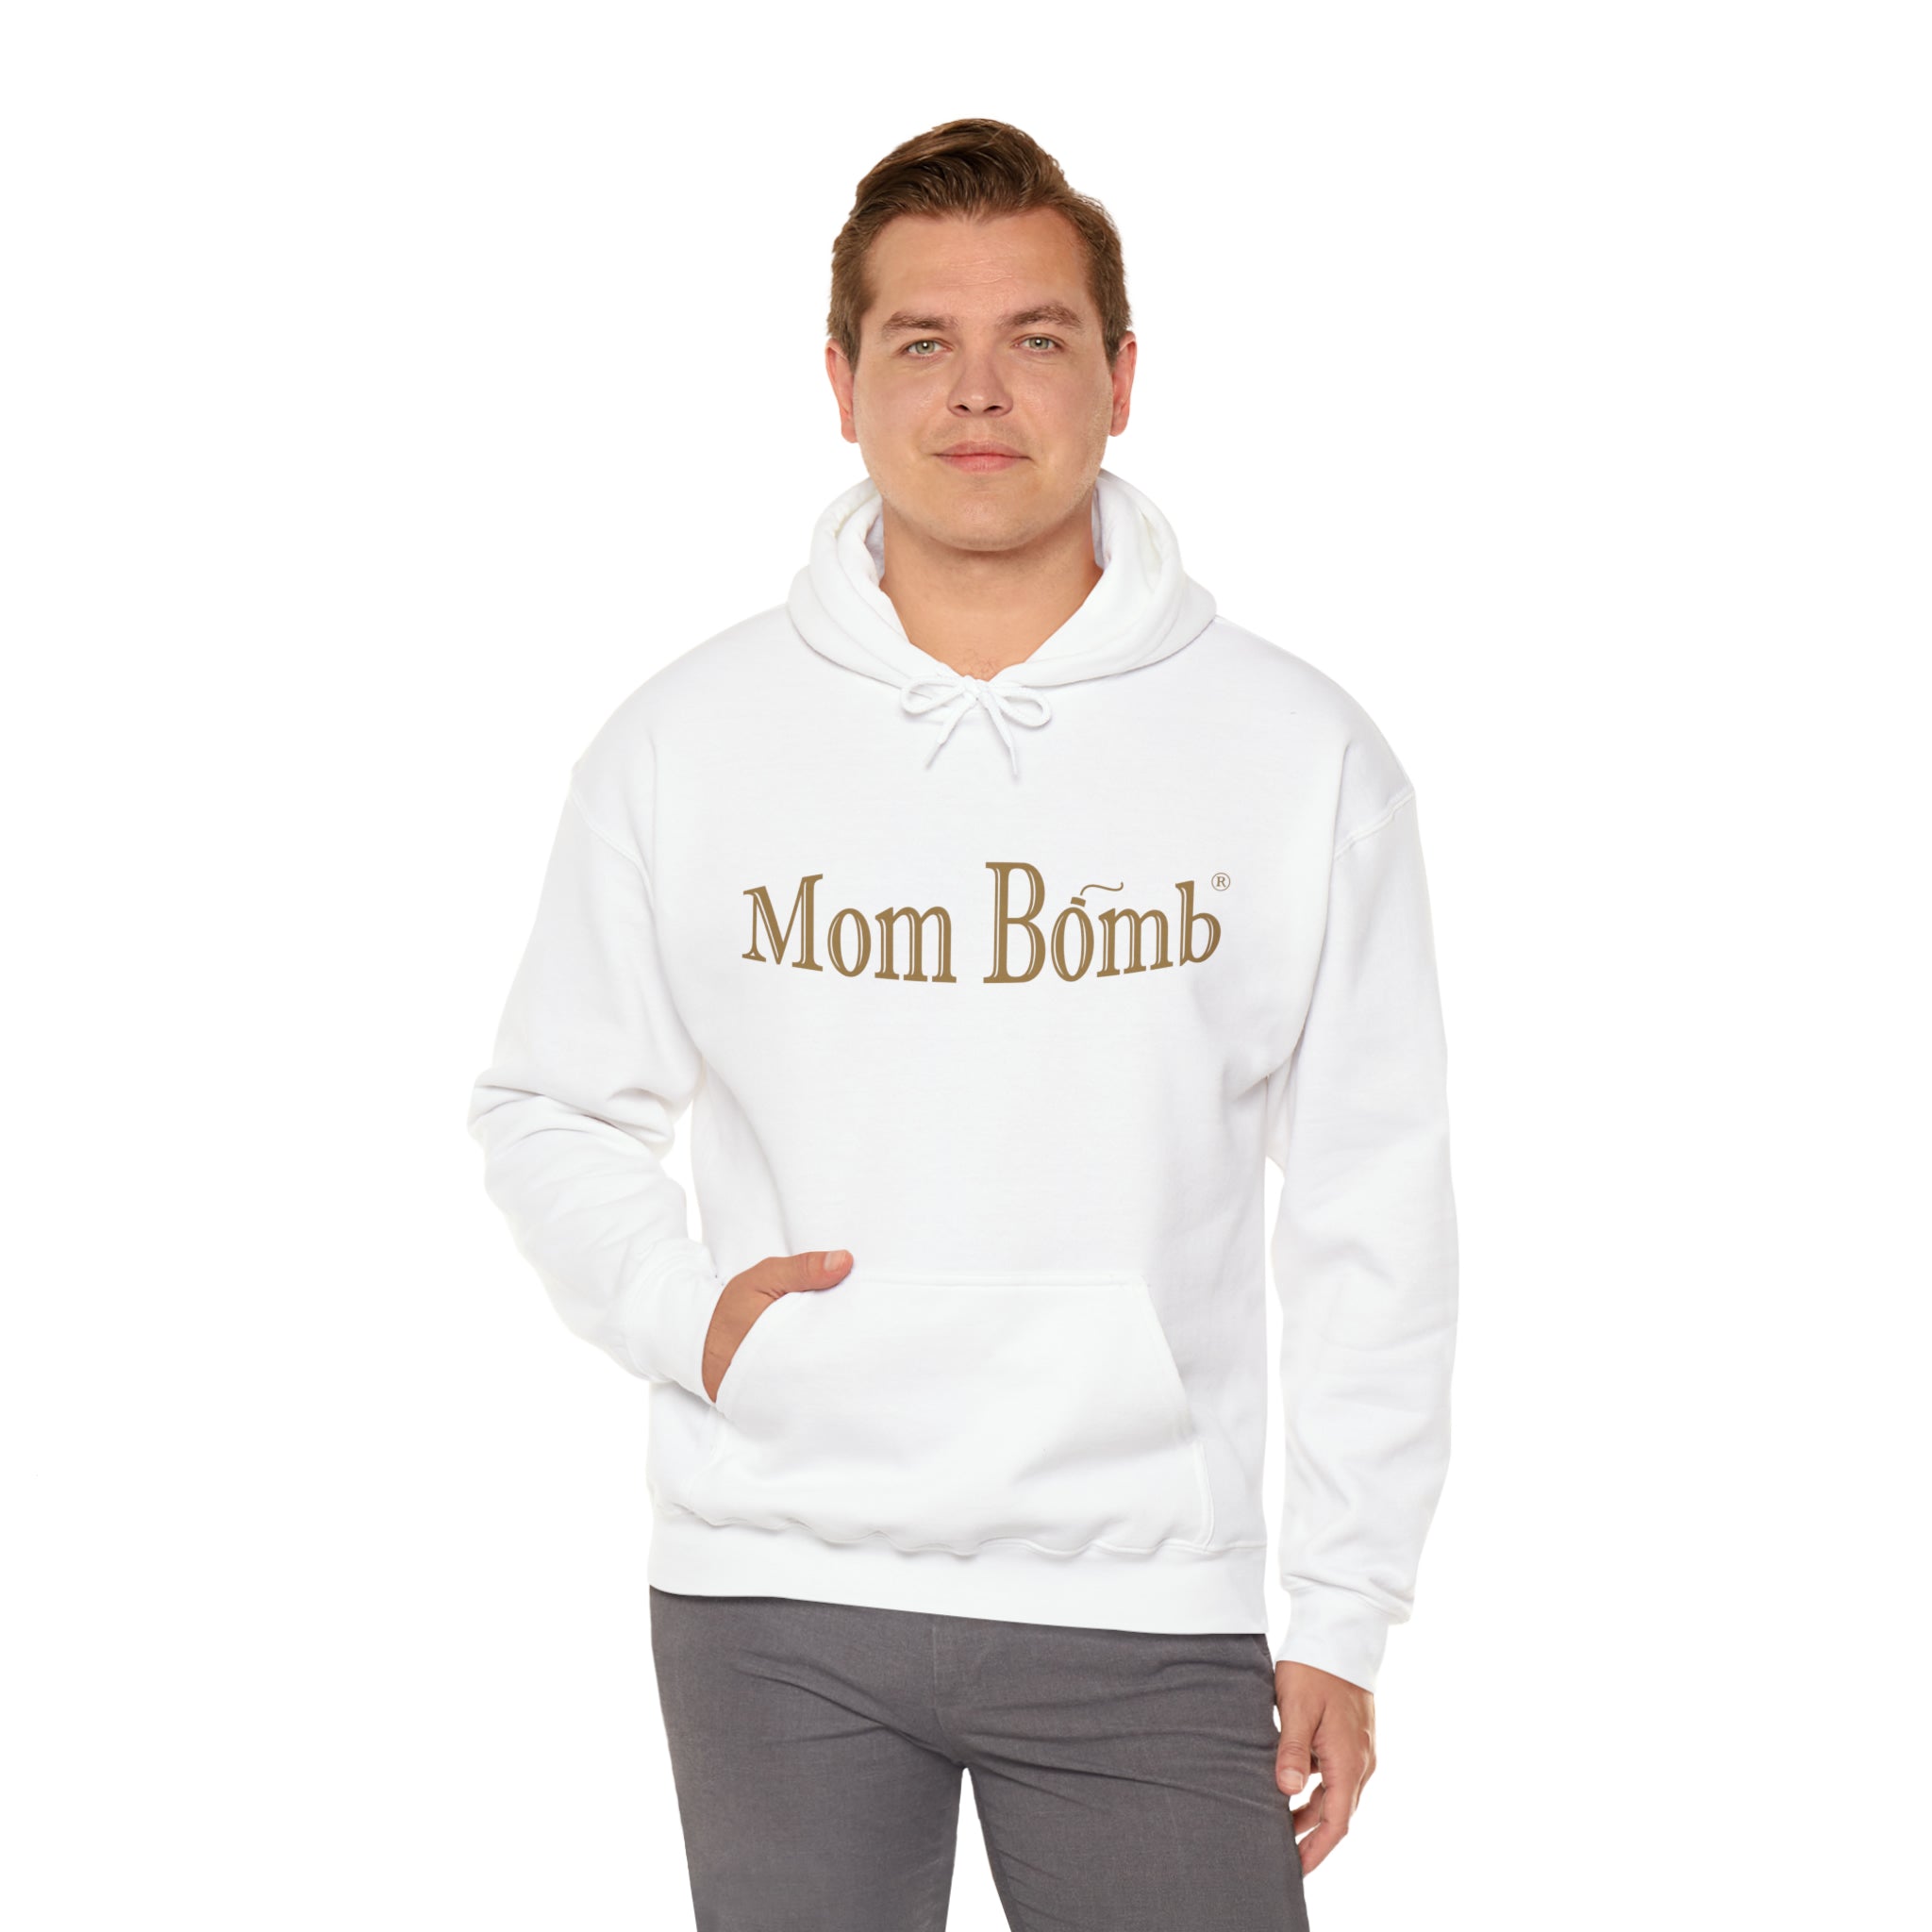 The Mom Bomb Hoodie